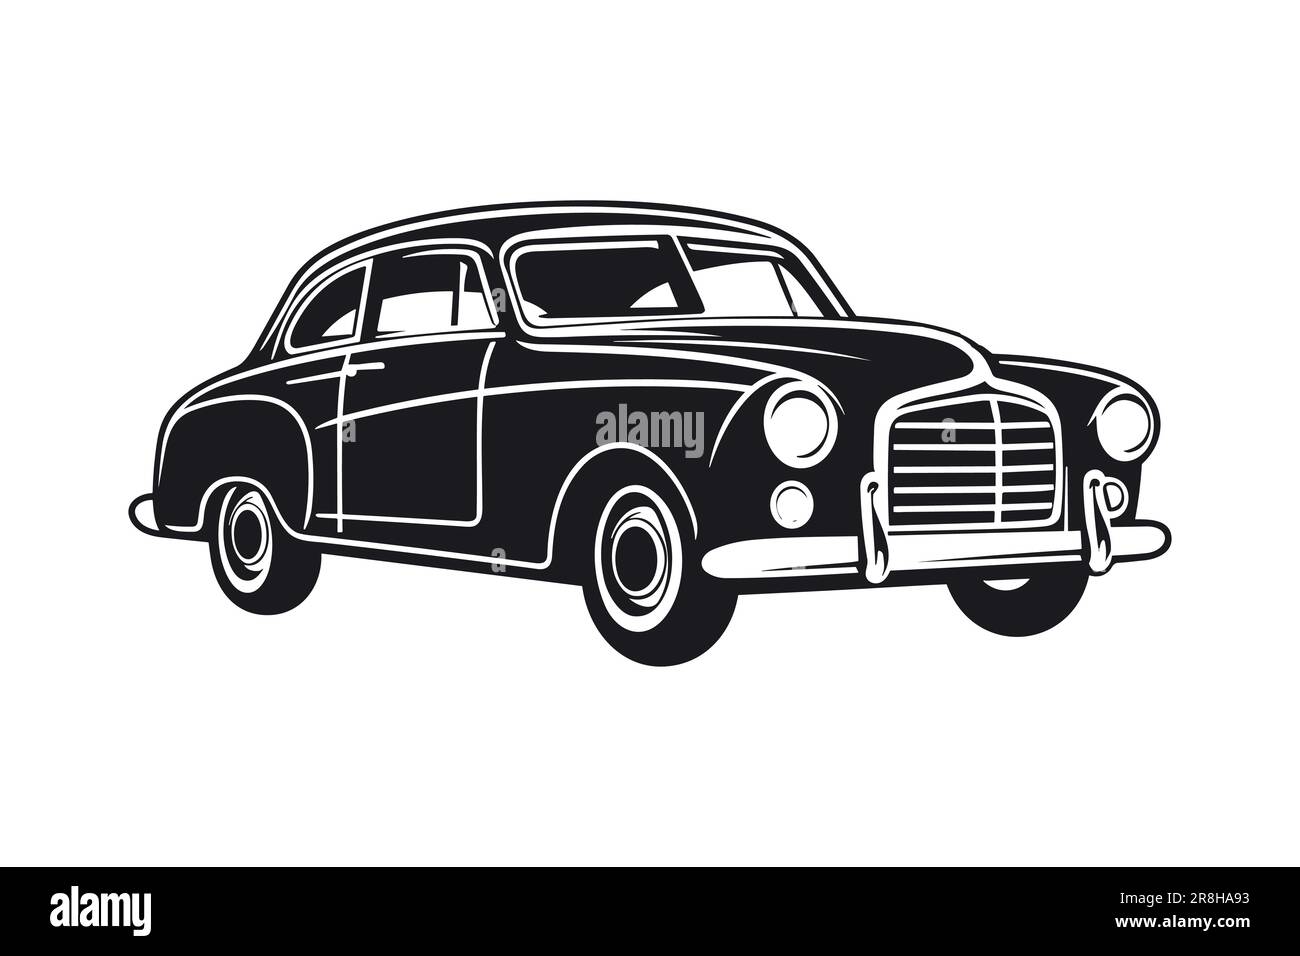 https://c8.alamy.com/comp/2R8HA93/vintage-classic-car-silhouette-retro-car-drawing-vector-illustration-2R8HA93.jpg